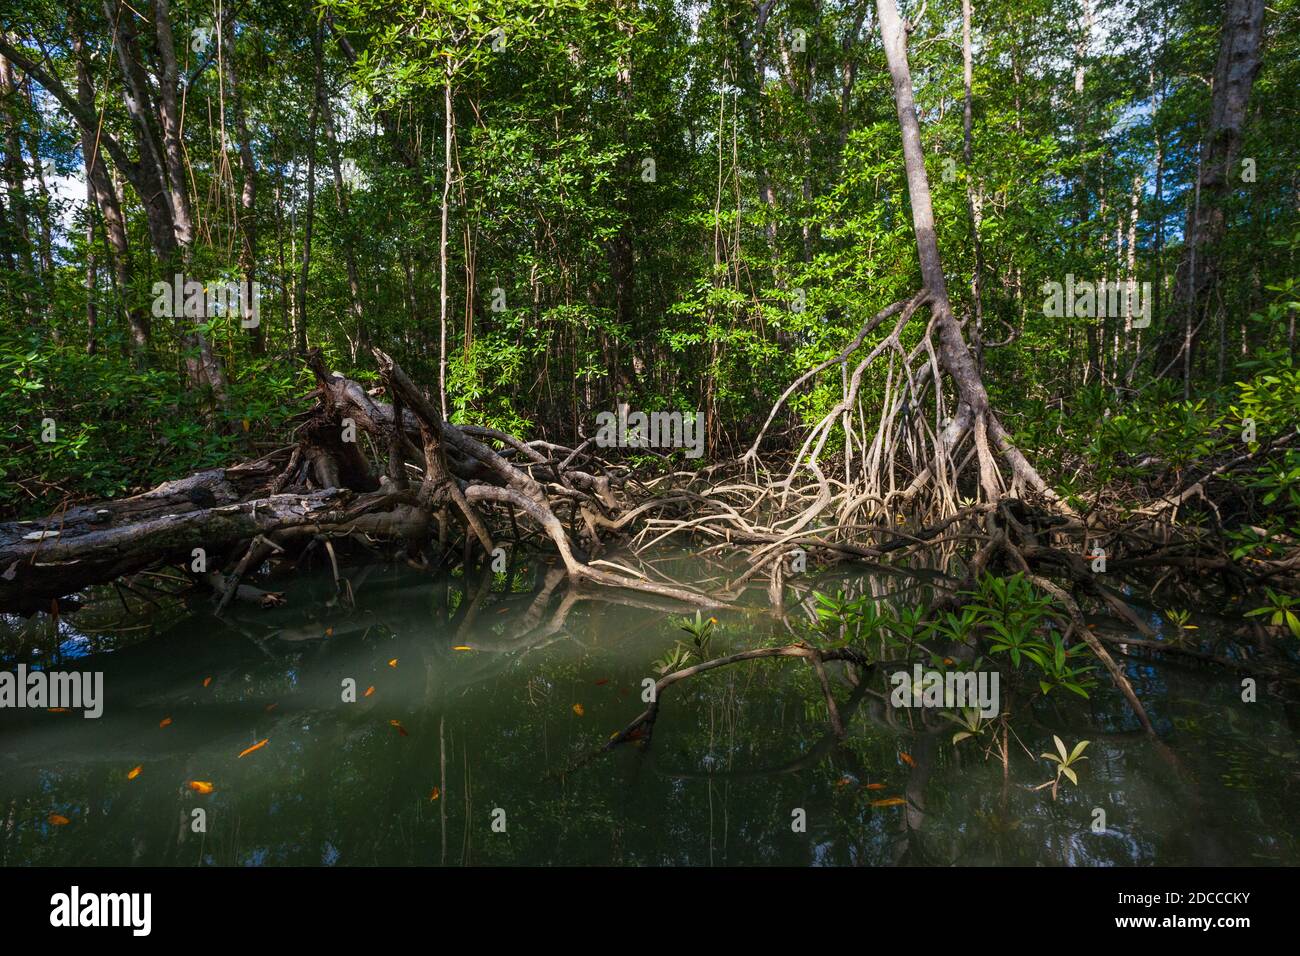 Mangrove forest at Coiba island national park, Veraguas province, Republic of Panama. Stock Photo